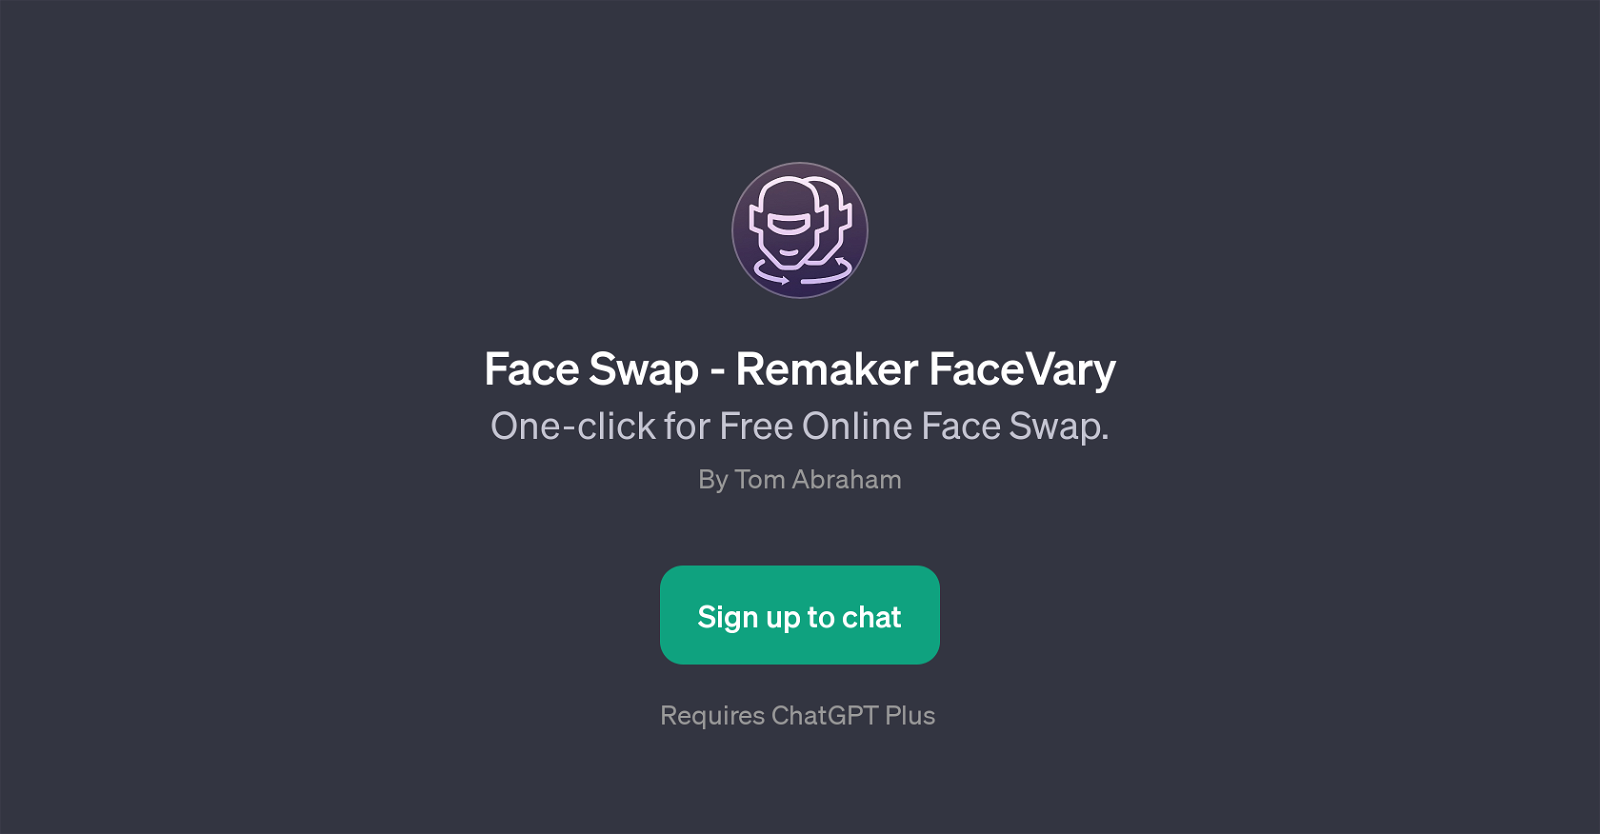 Face Swap - Remaker FaceVary website